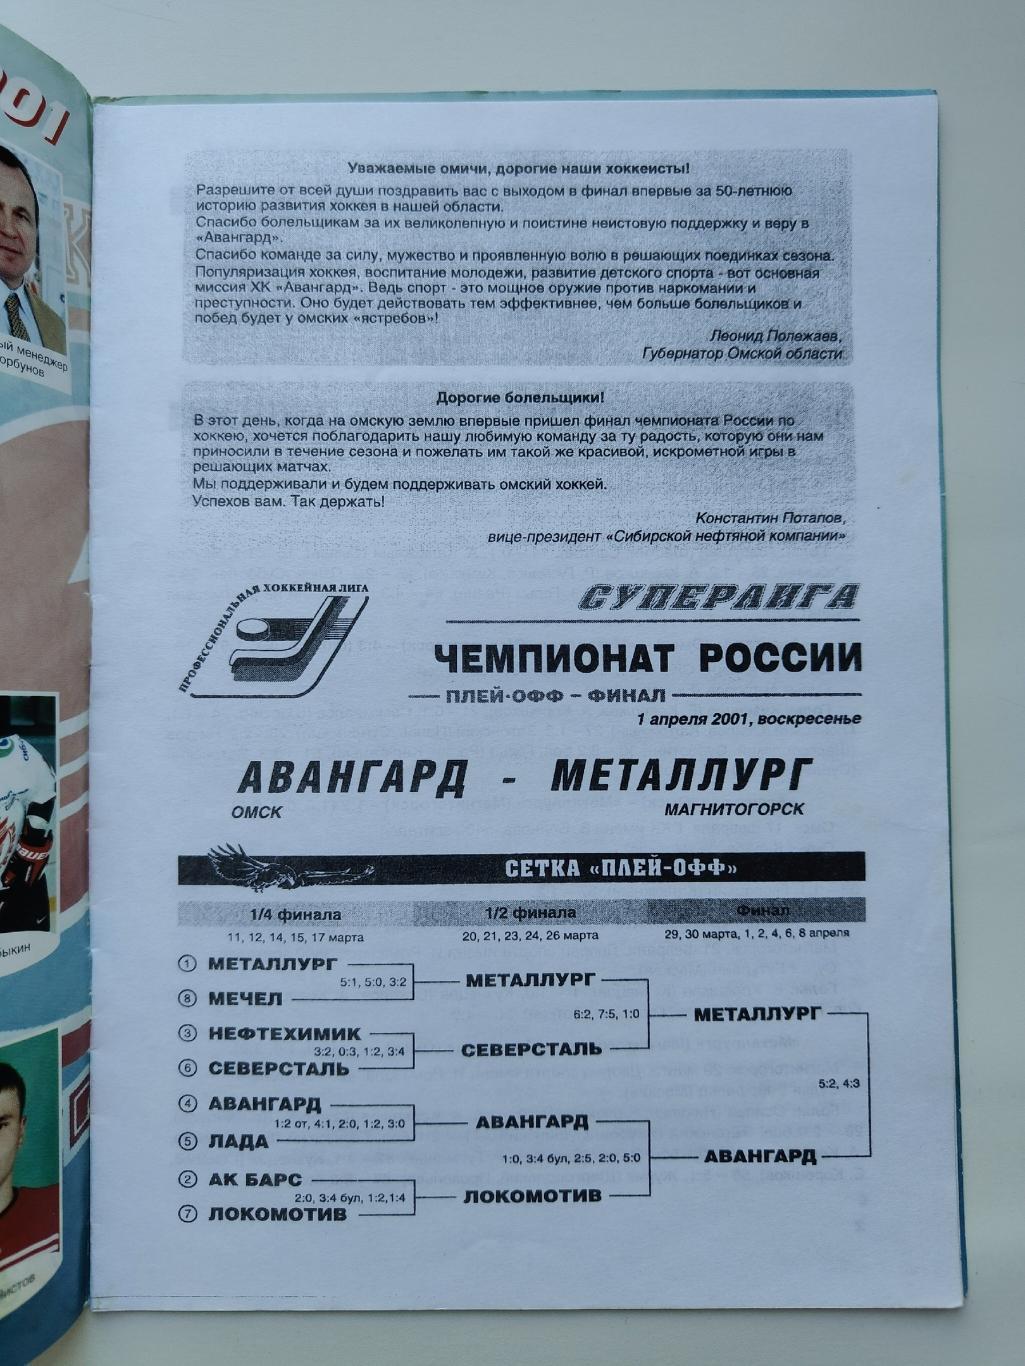 ФИНАЛ Авангард Омск - Металлург Магнитогорск 1 апреля 2001 плей-офф 1